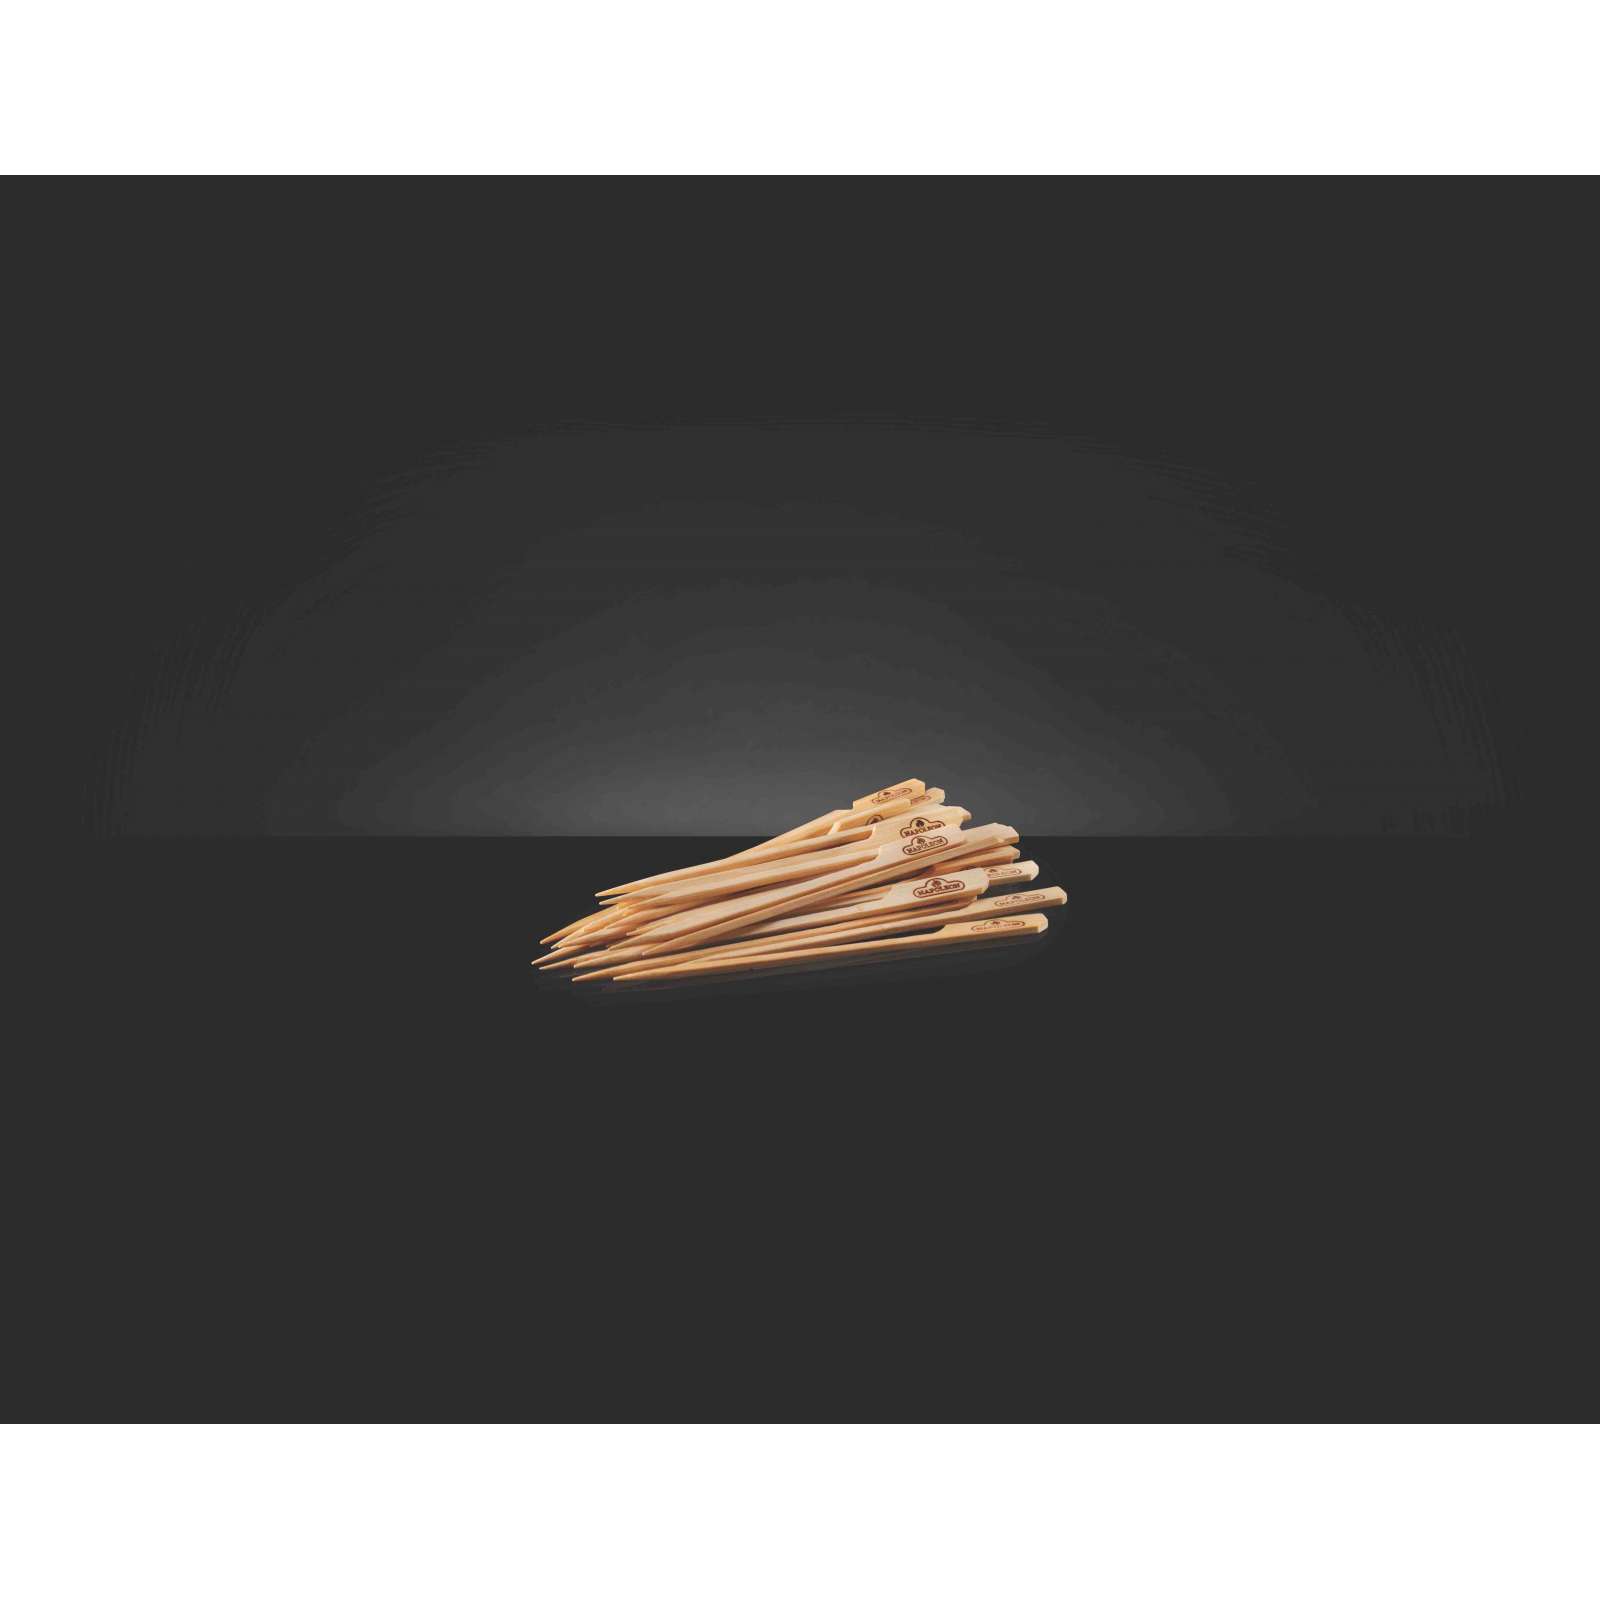 Napoleon Holz-Spieße aus Bambus 15 cm lang 48 Stück 70116